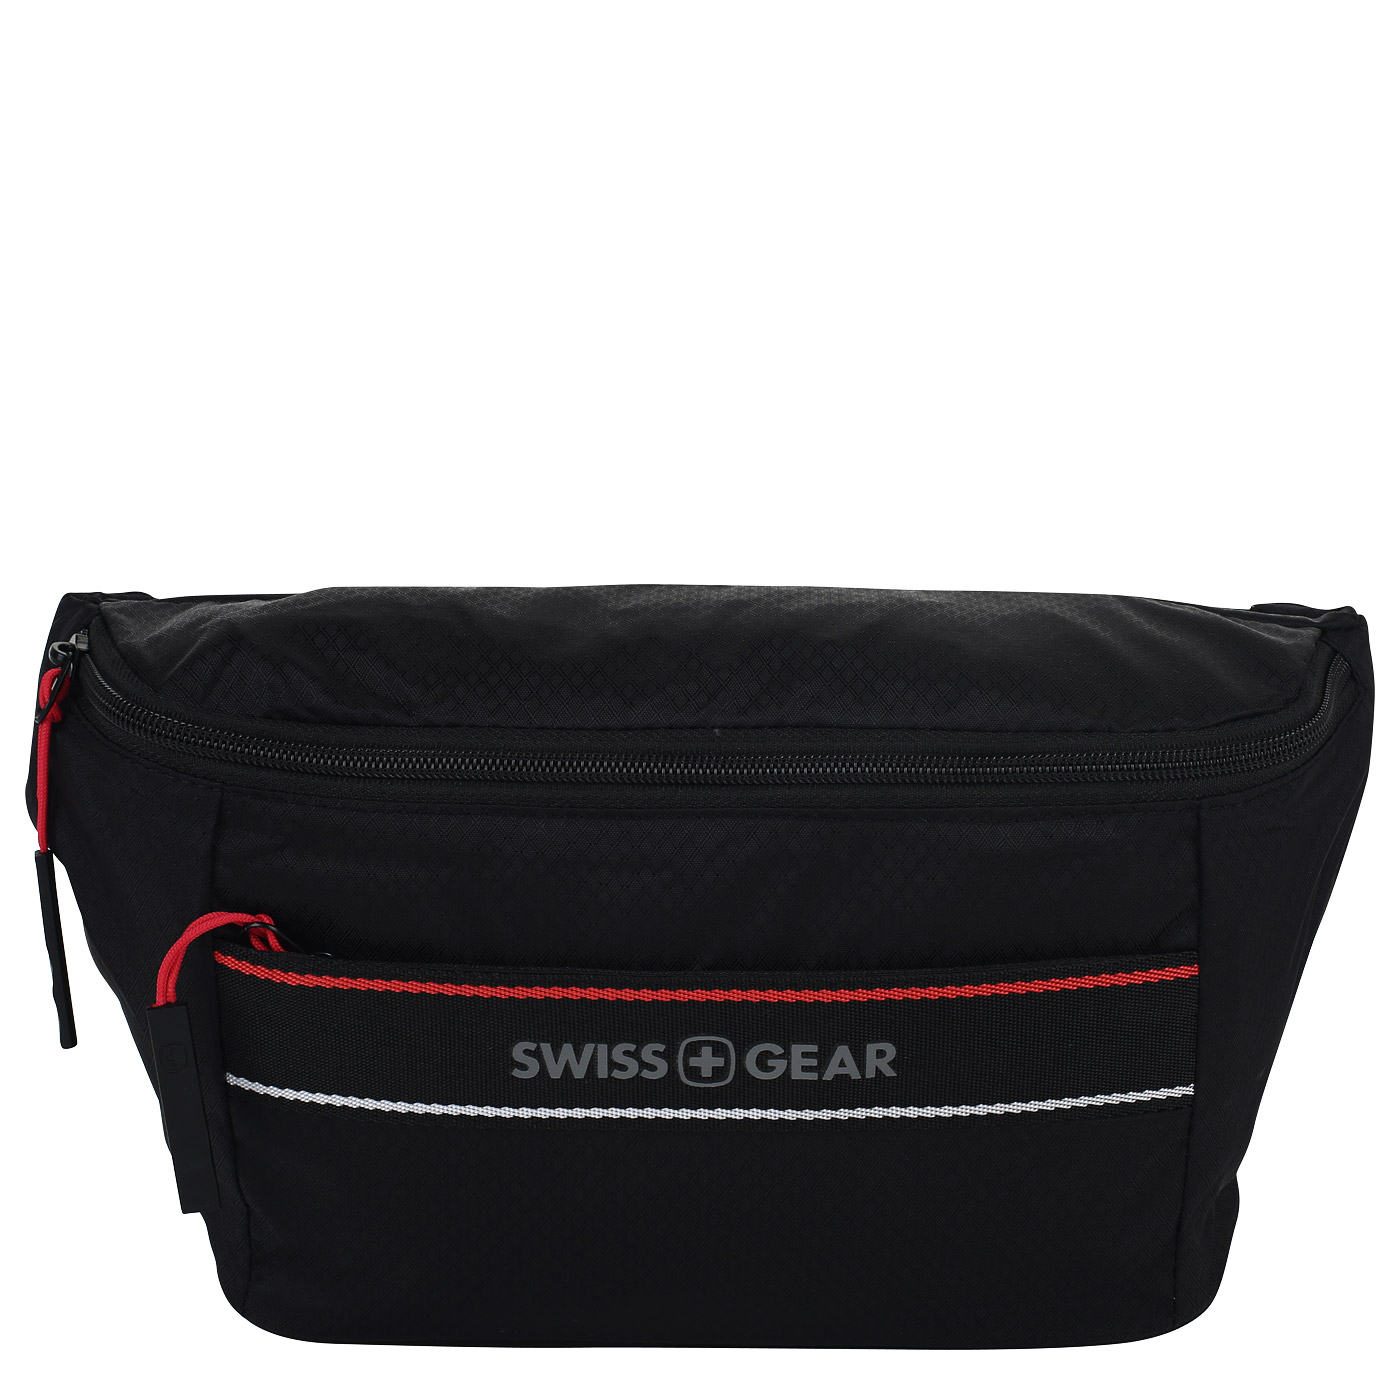 Swissgear Поясная сумка с плетением рип-стоп